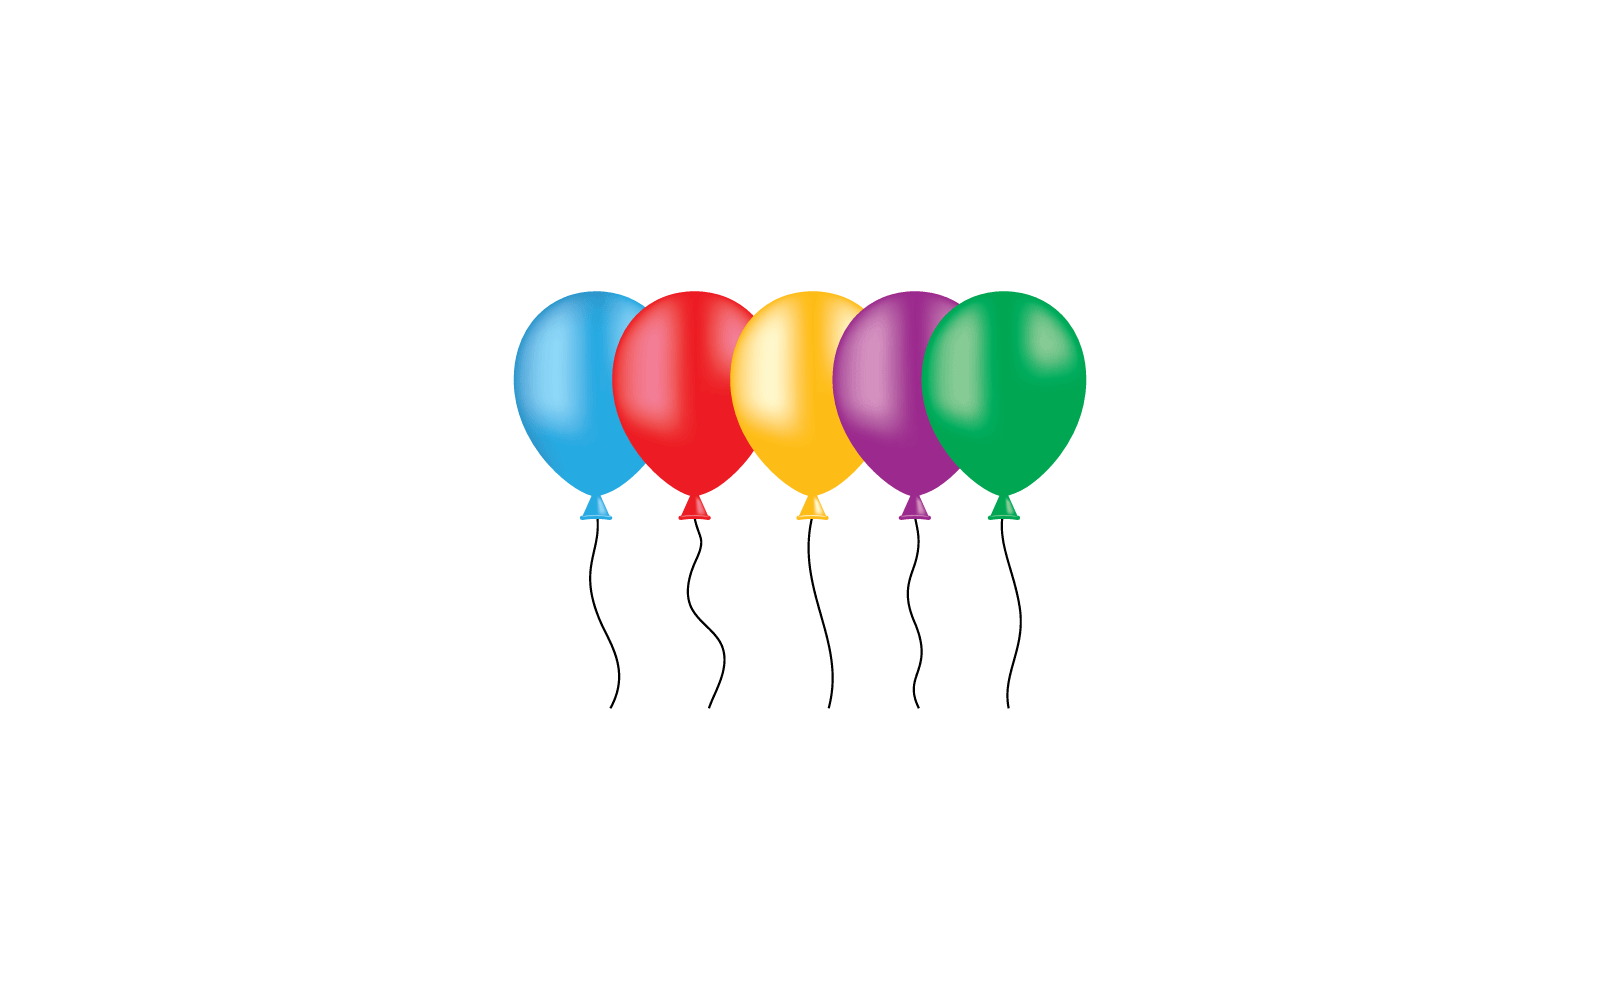 Realistic balloon design illustration on white background